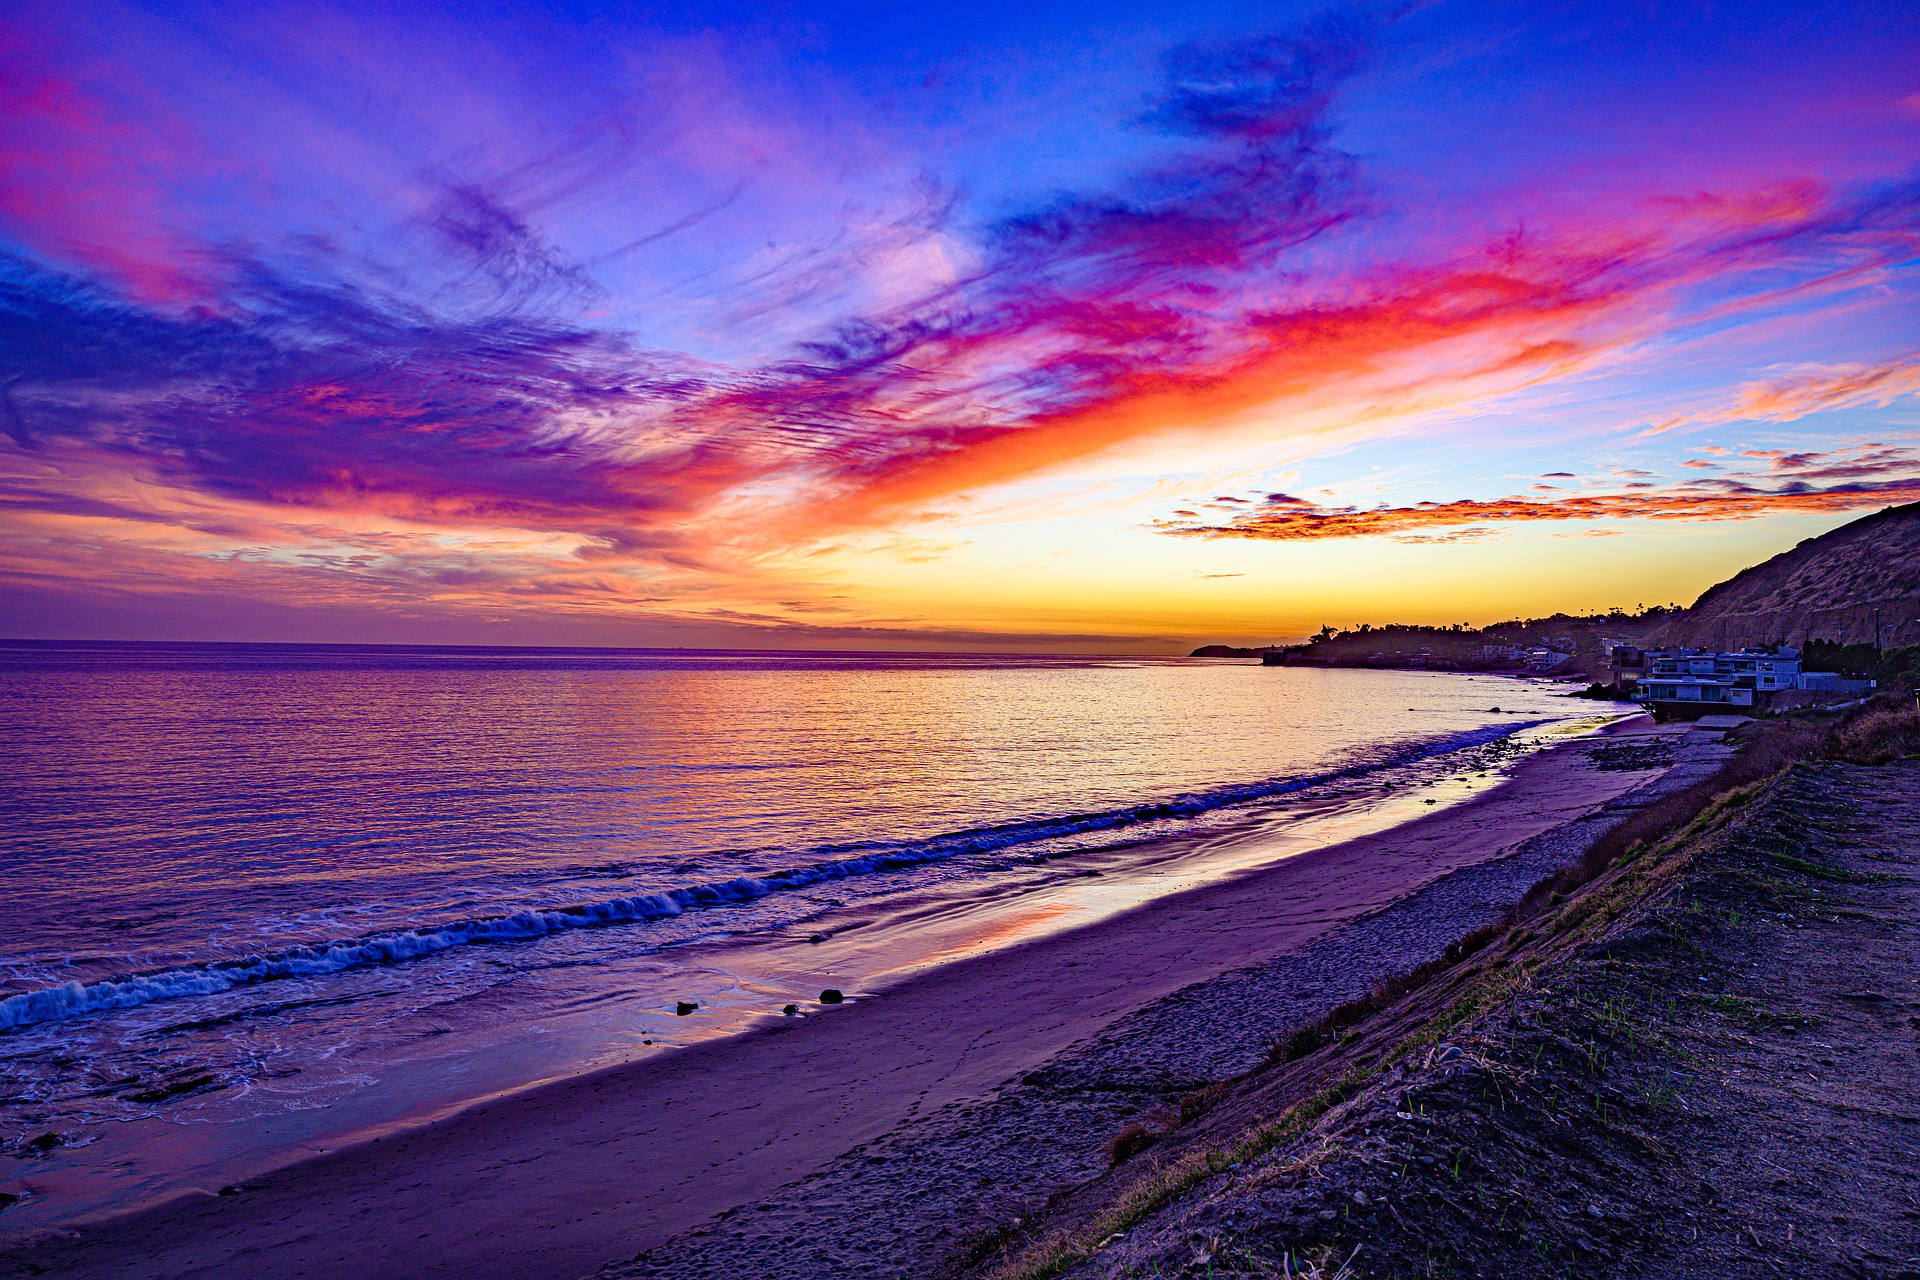 A sunset on a Los Angeles beach